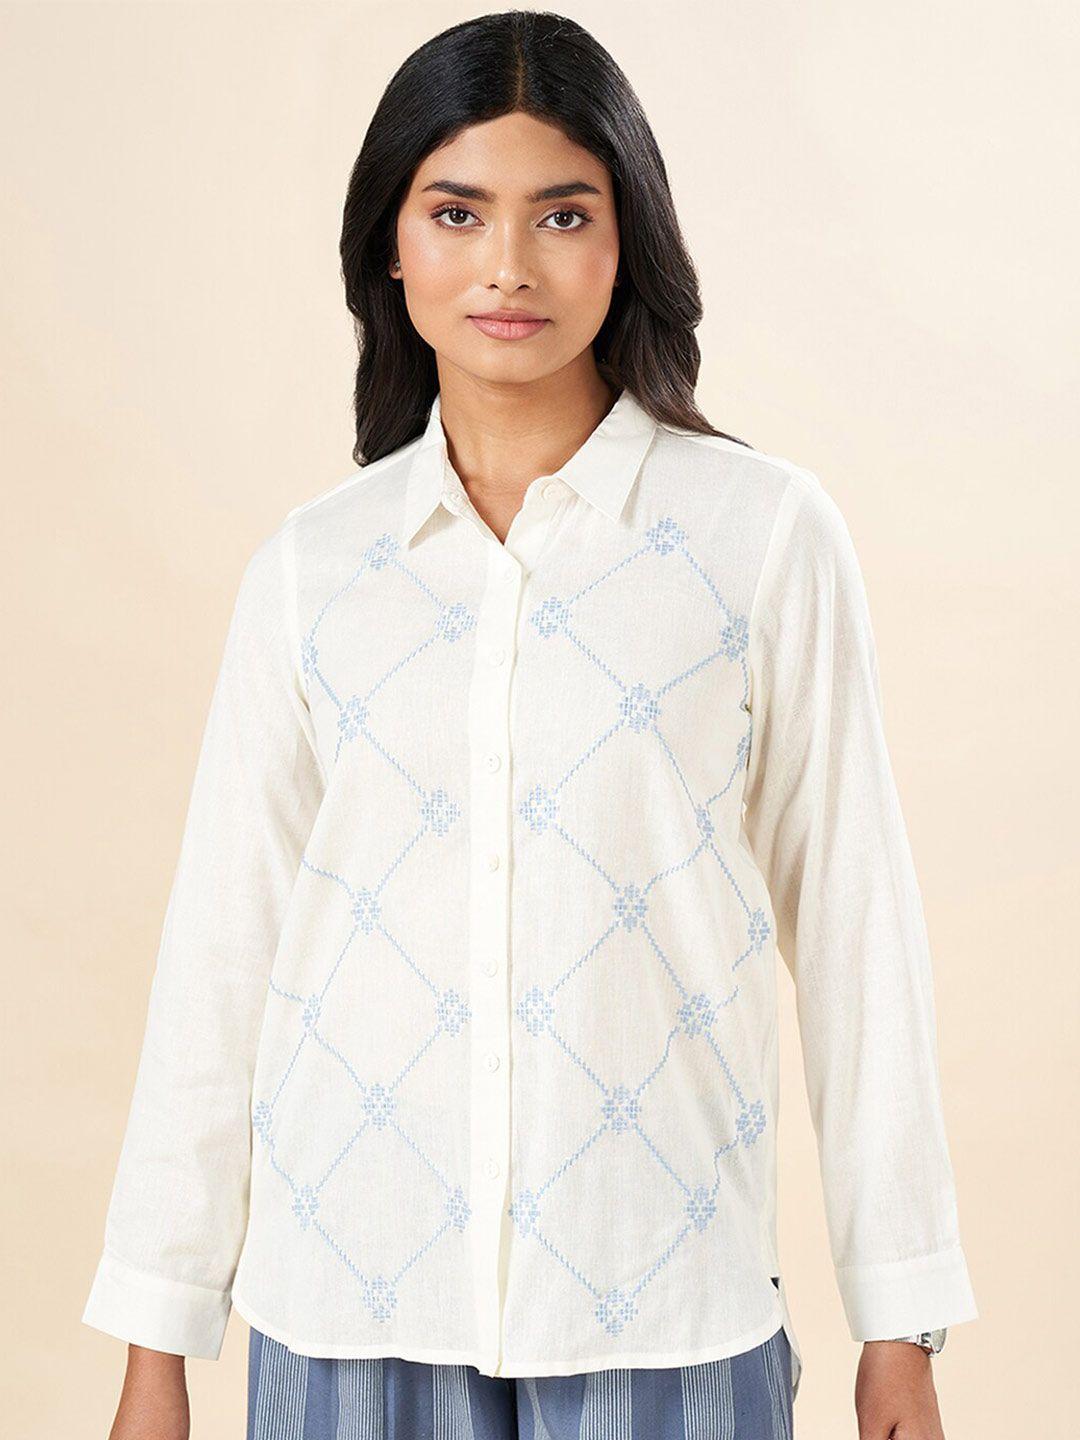 akkriti by pantaloons women classic opaque printed casual shirt